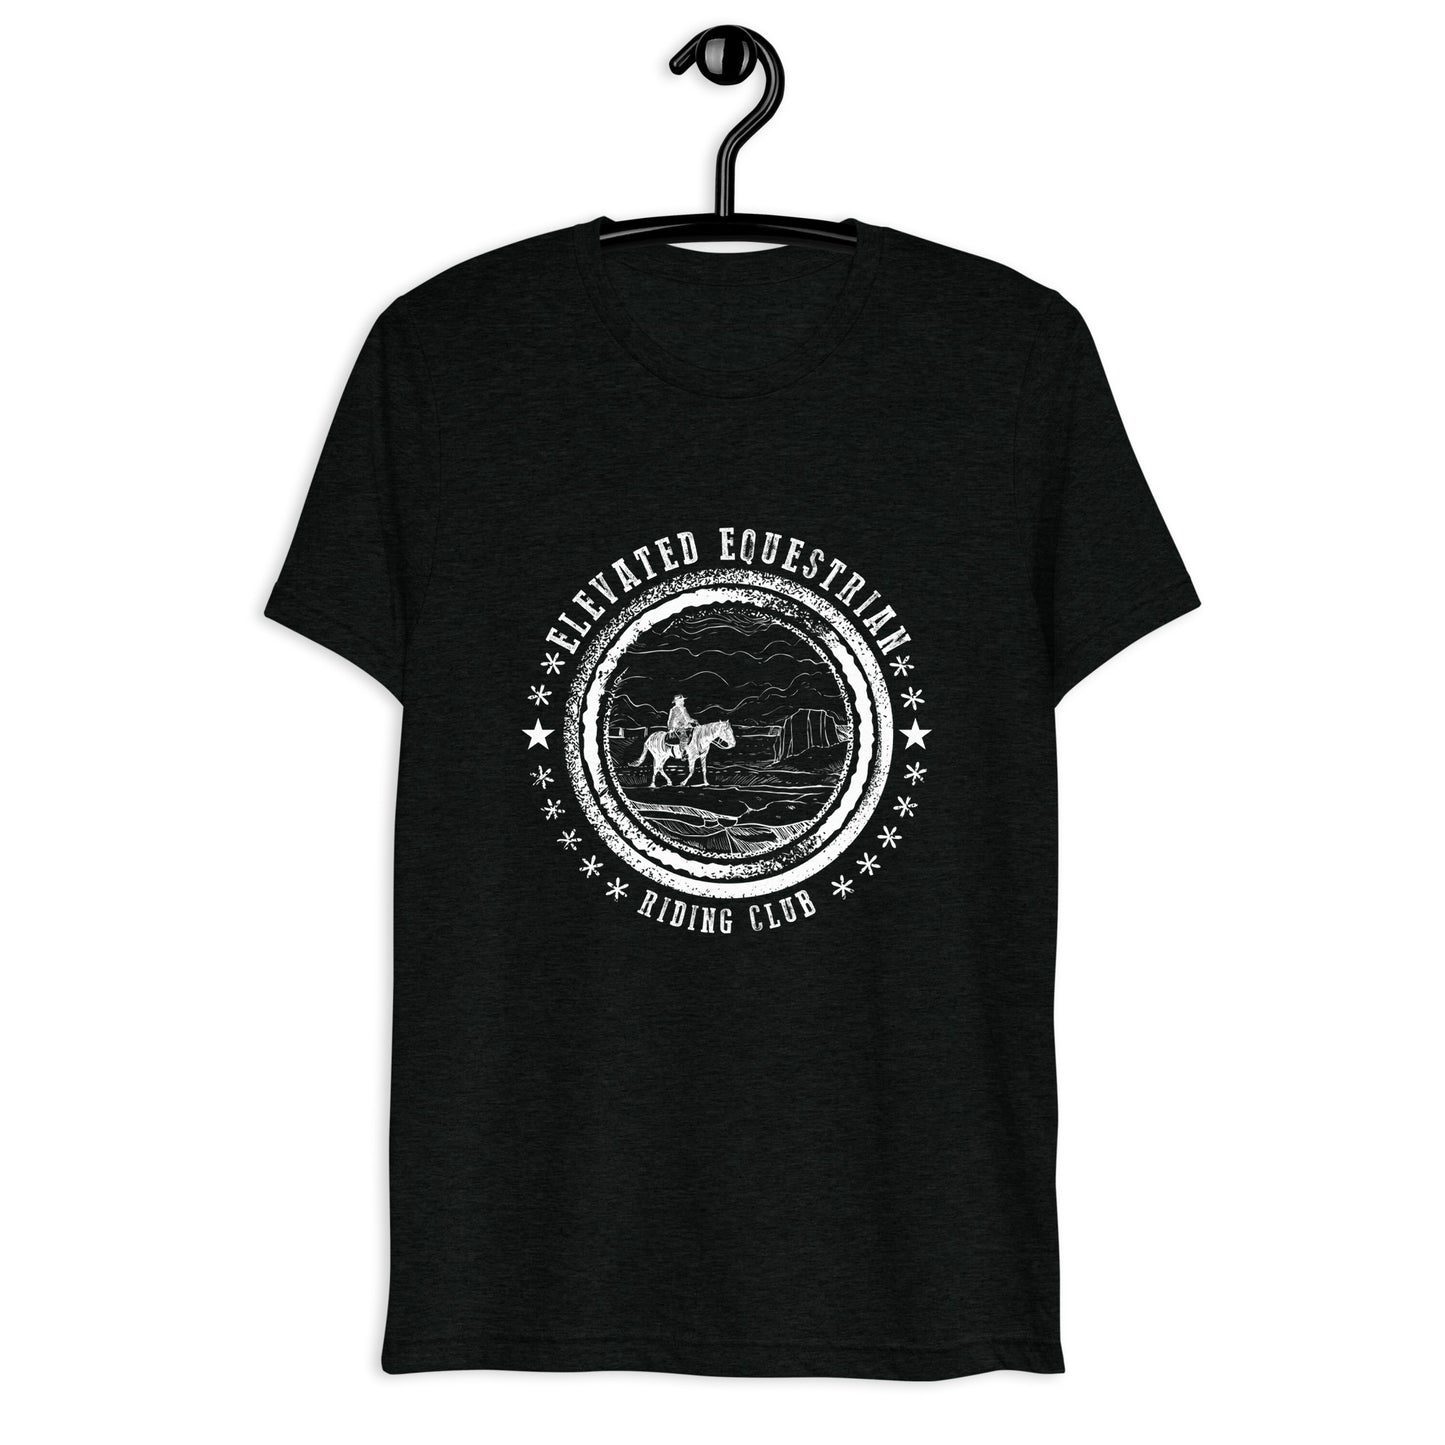 Elevated Equestrian Riding Club Black Unisex Short Sleeve T-shirt